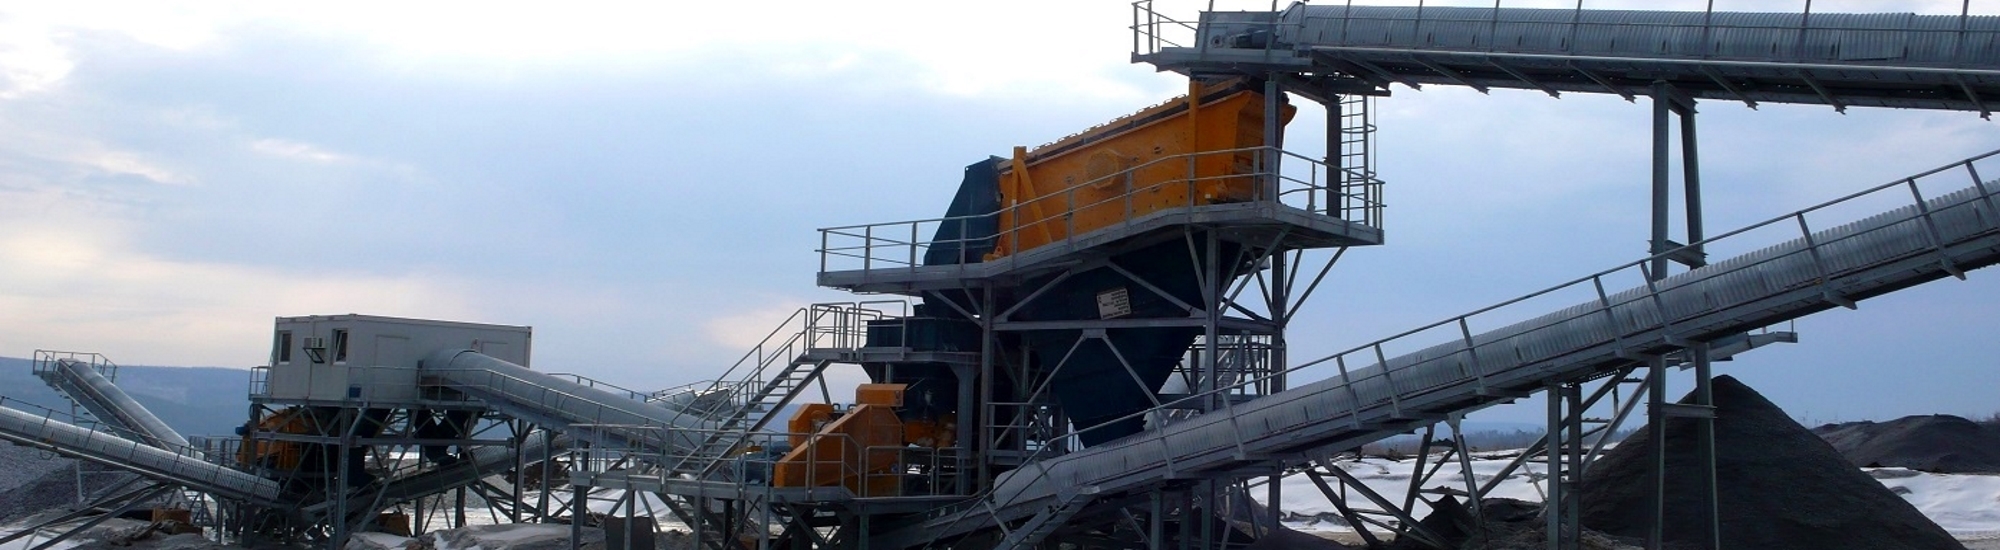 mining ore sorting conveyor system